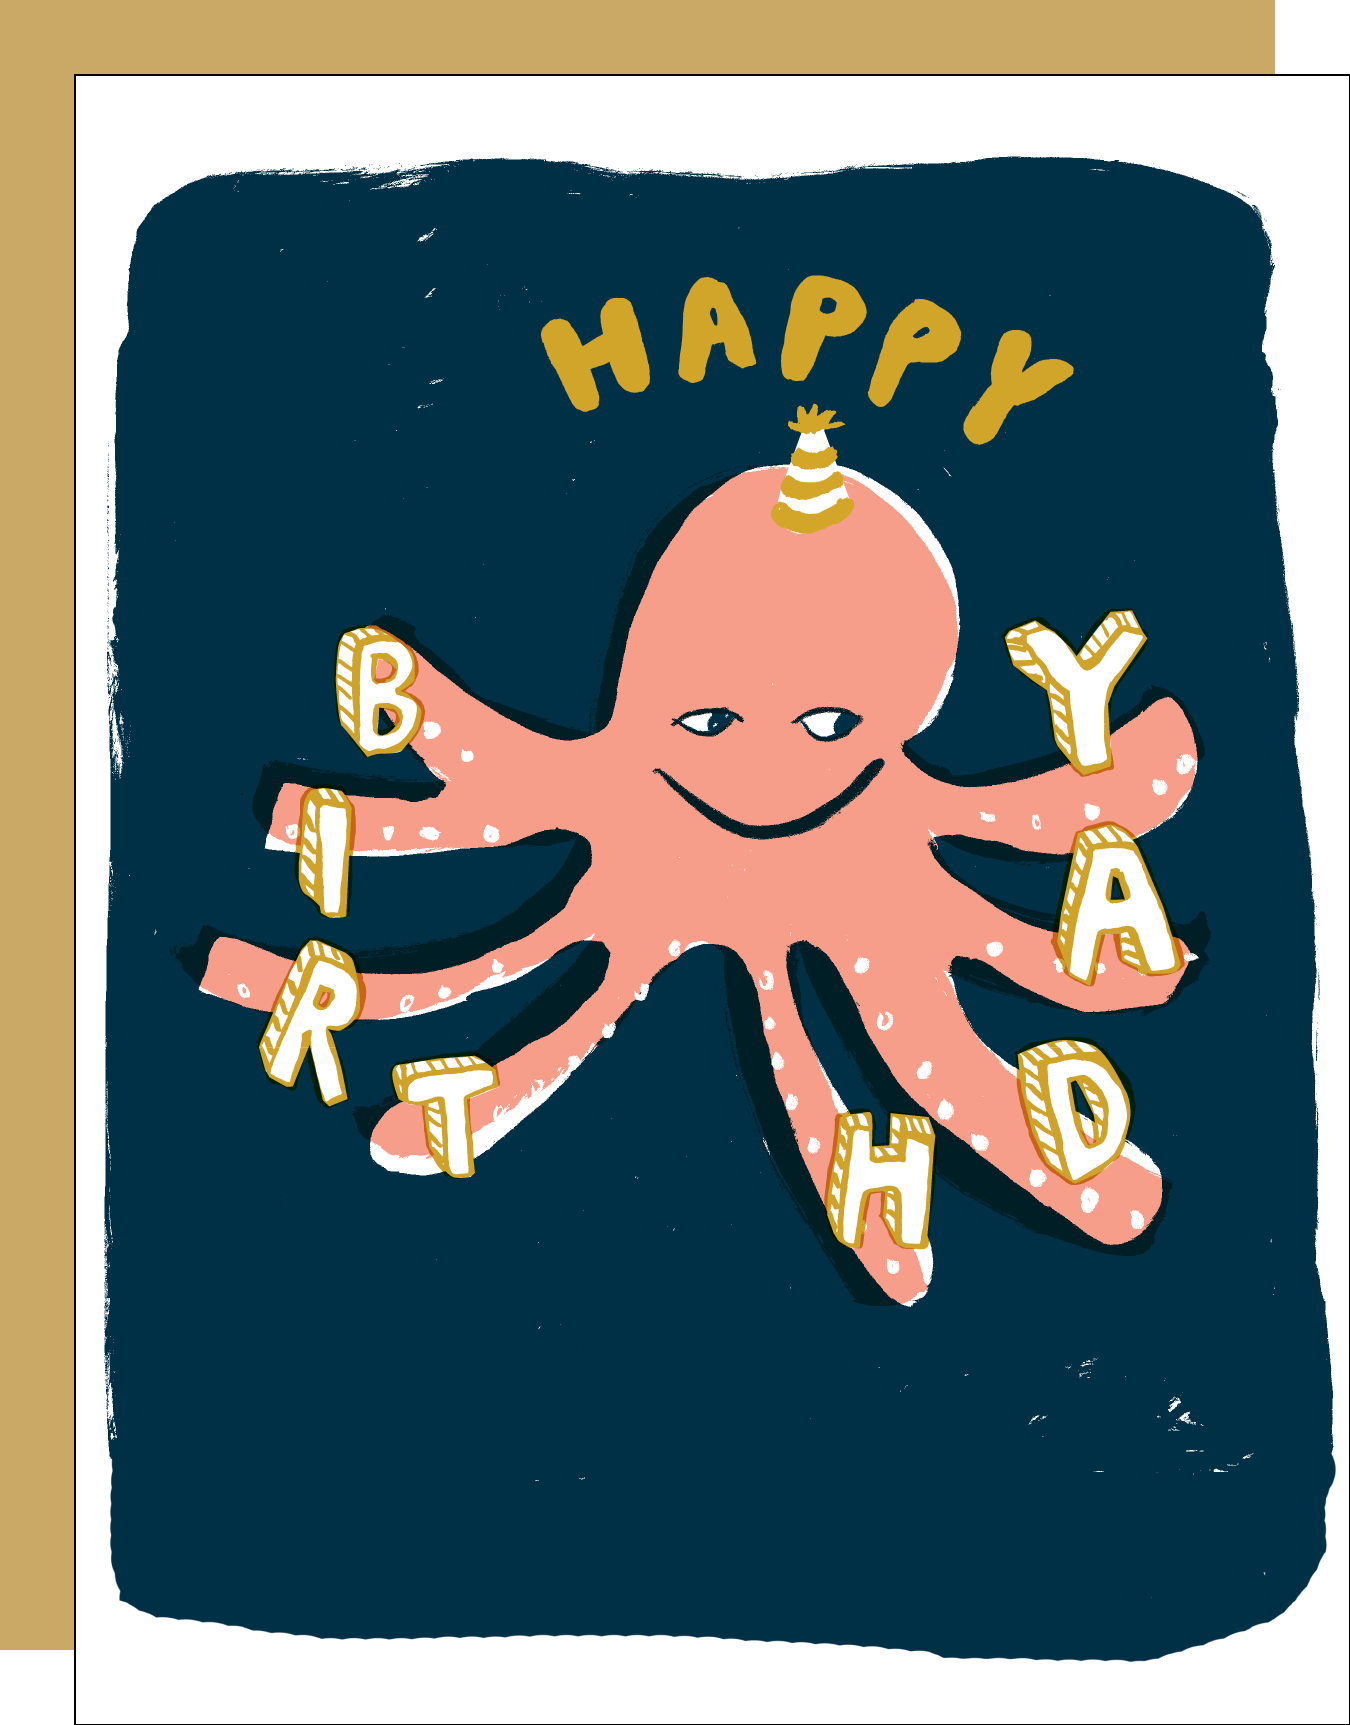 EGG PRESS - Octopus Birthday